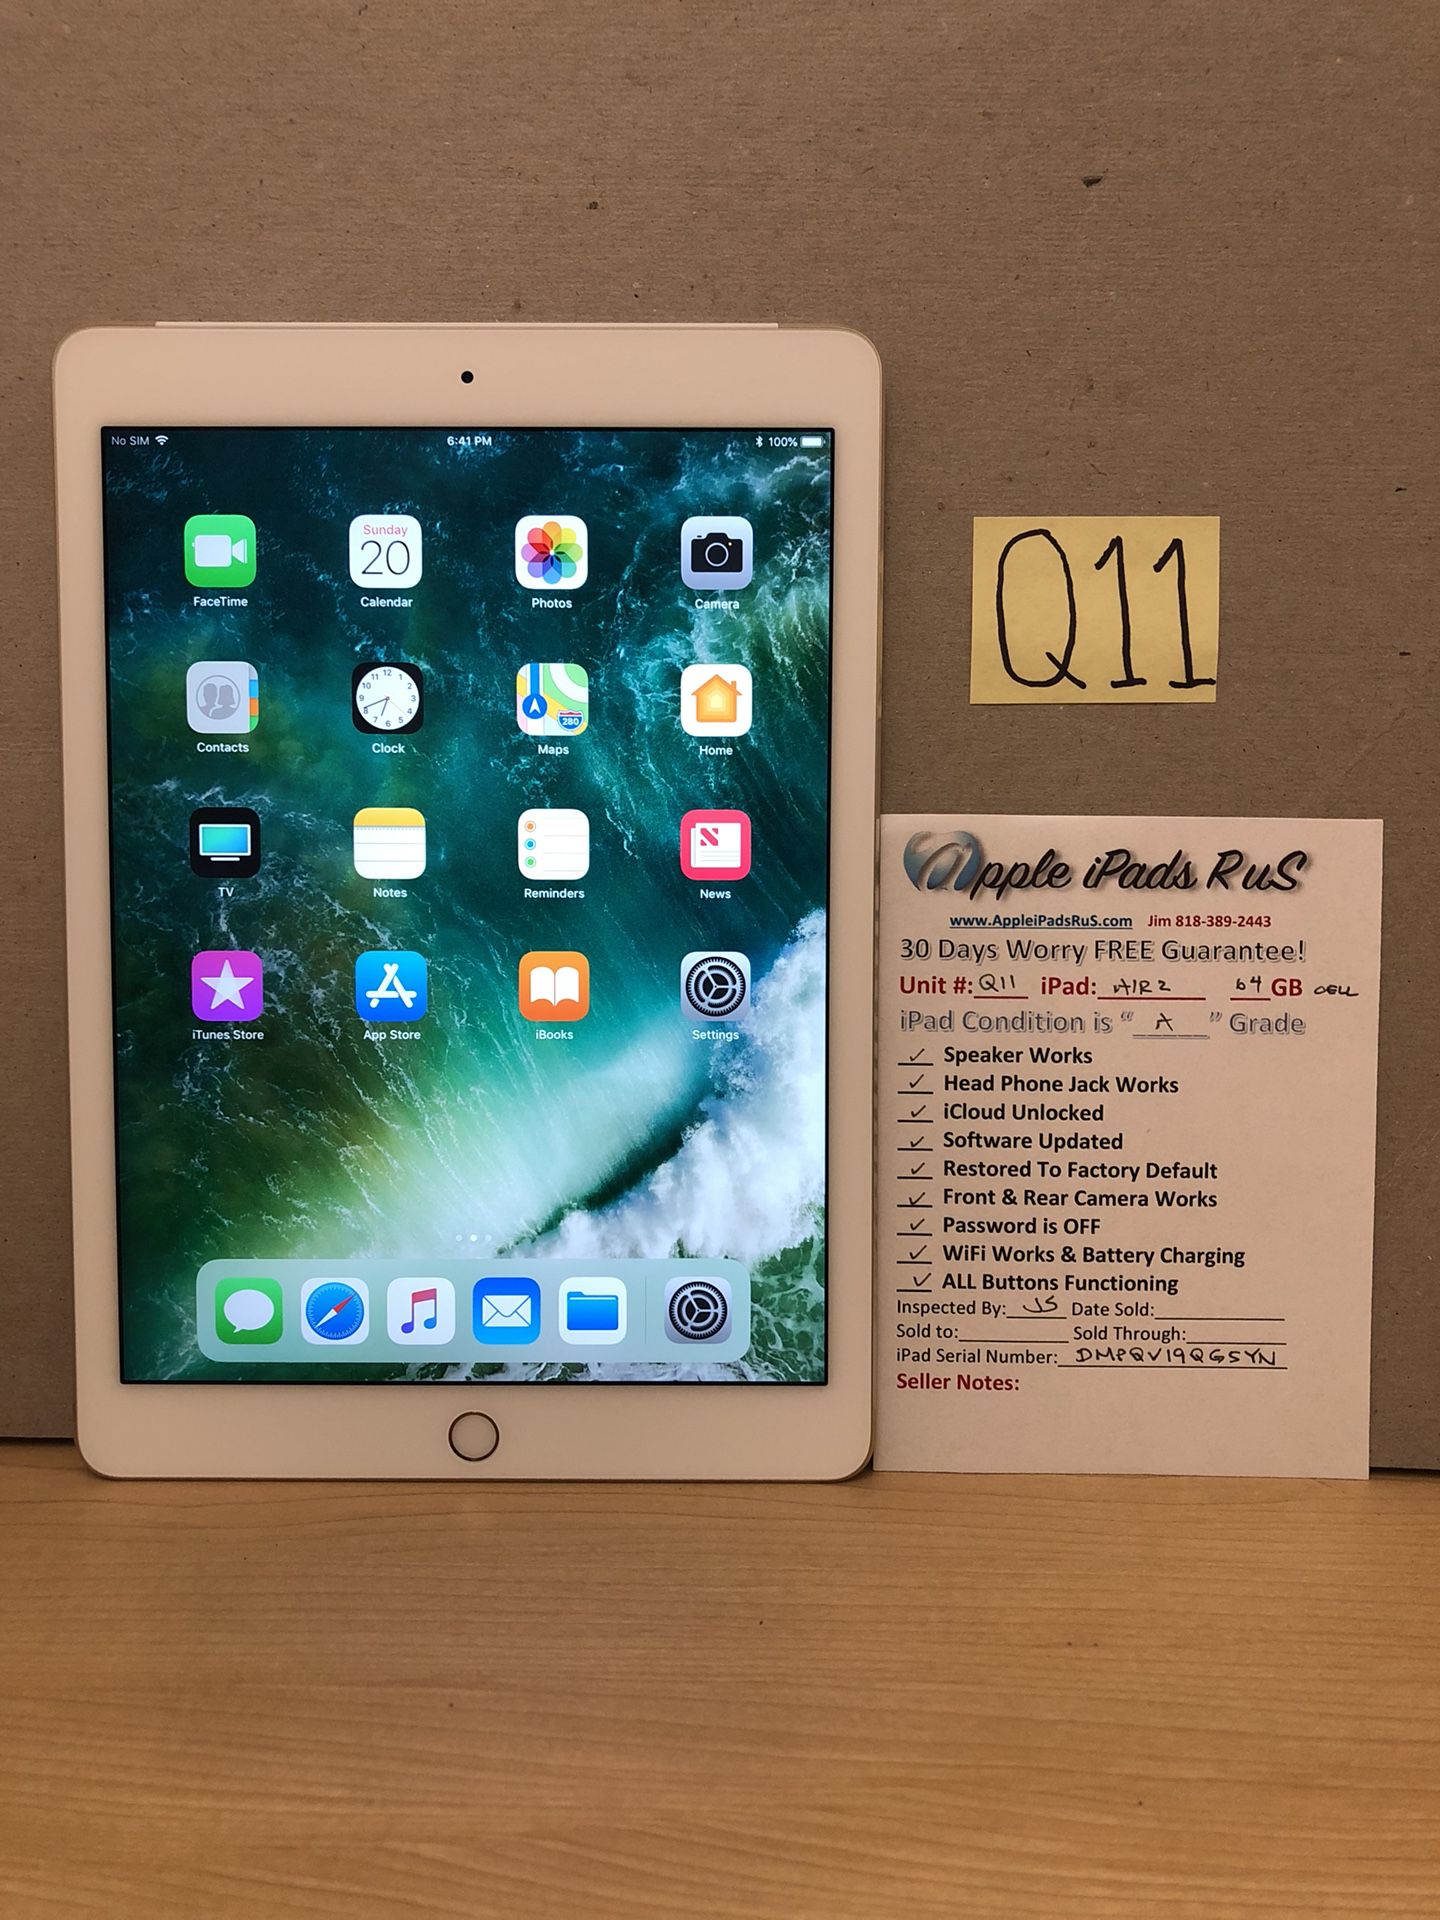 Q11 - iPad Air 2 64GB Cell-Unlocked